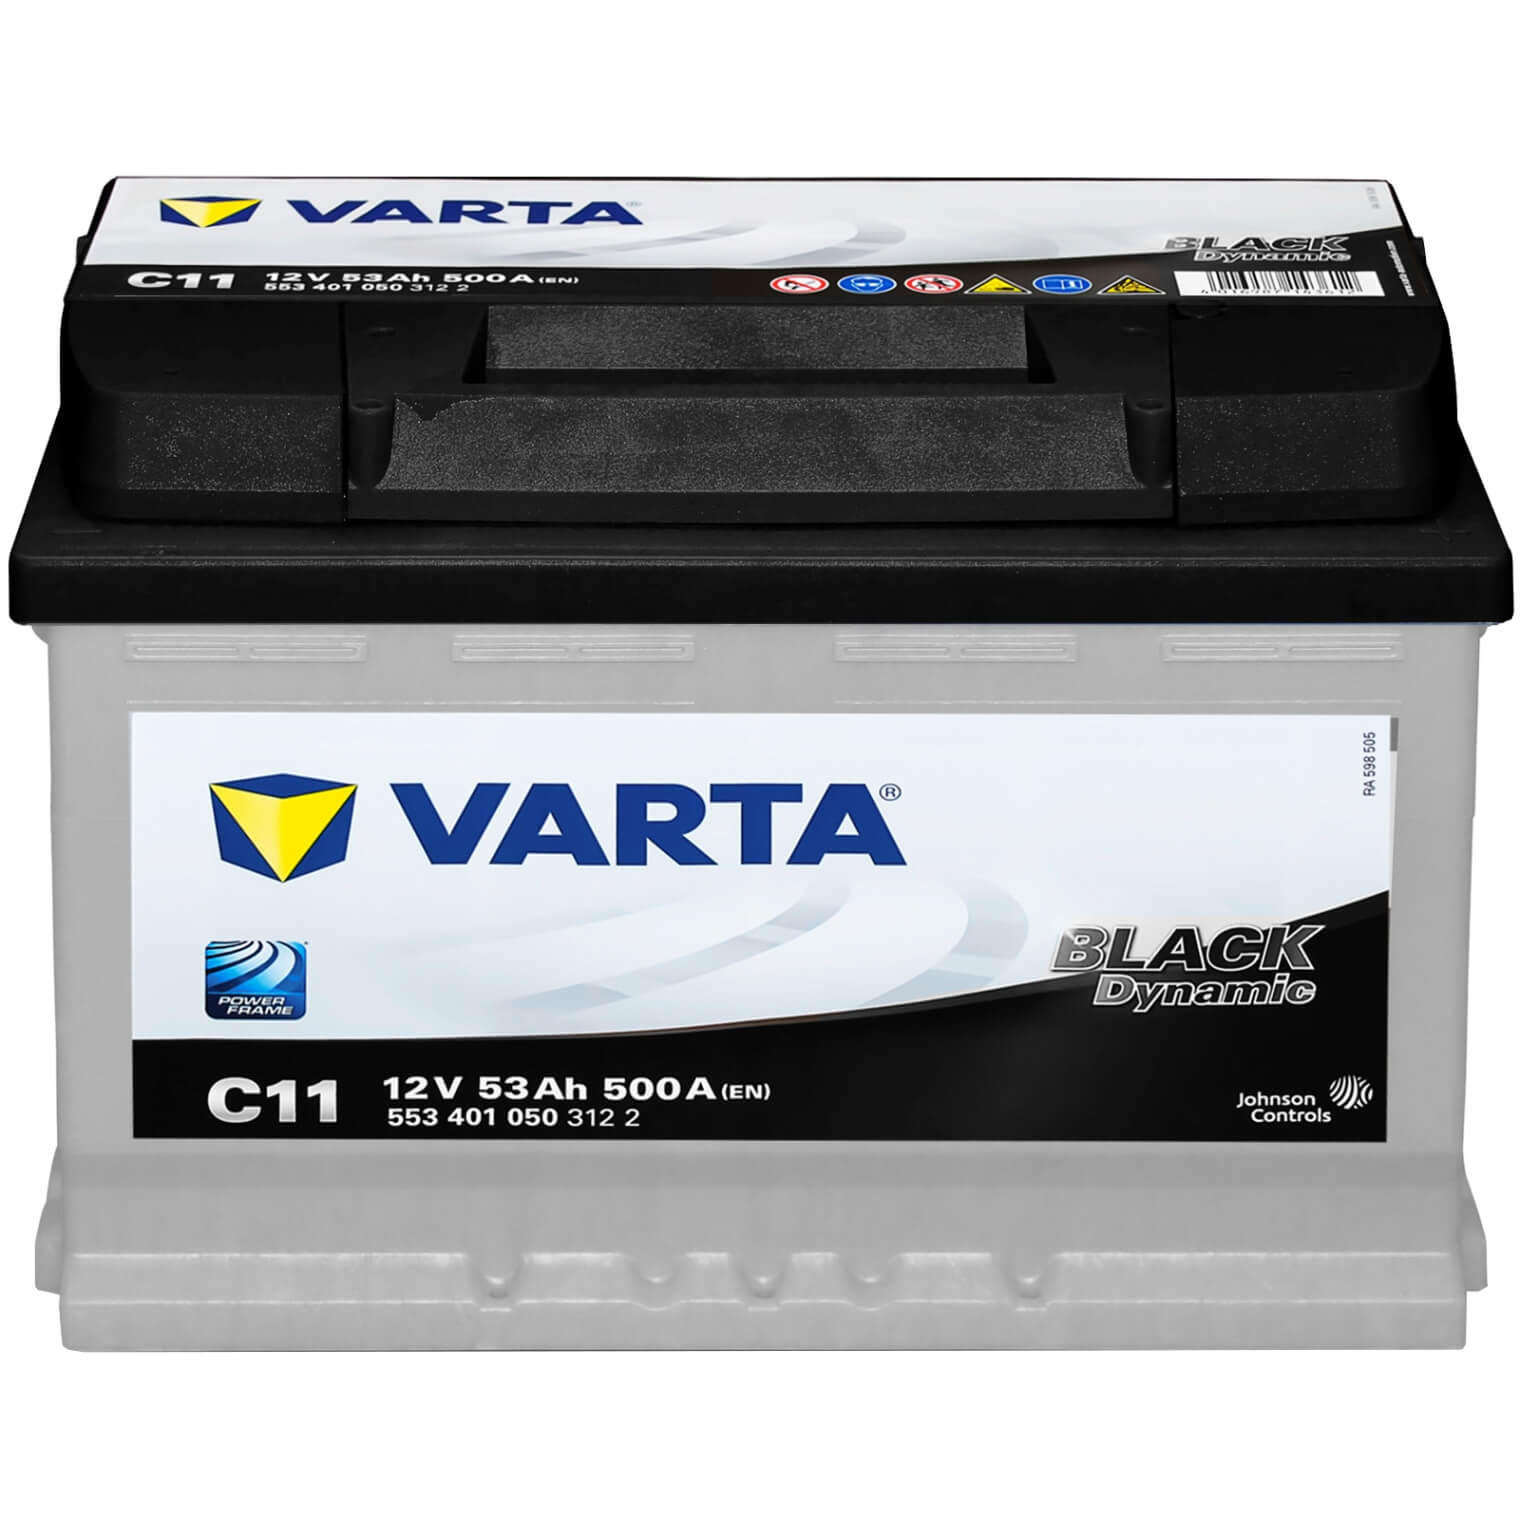 Varta C11 Black Dynamic 12V 53Ah 500A/EN